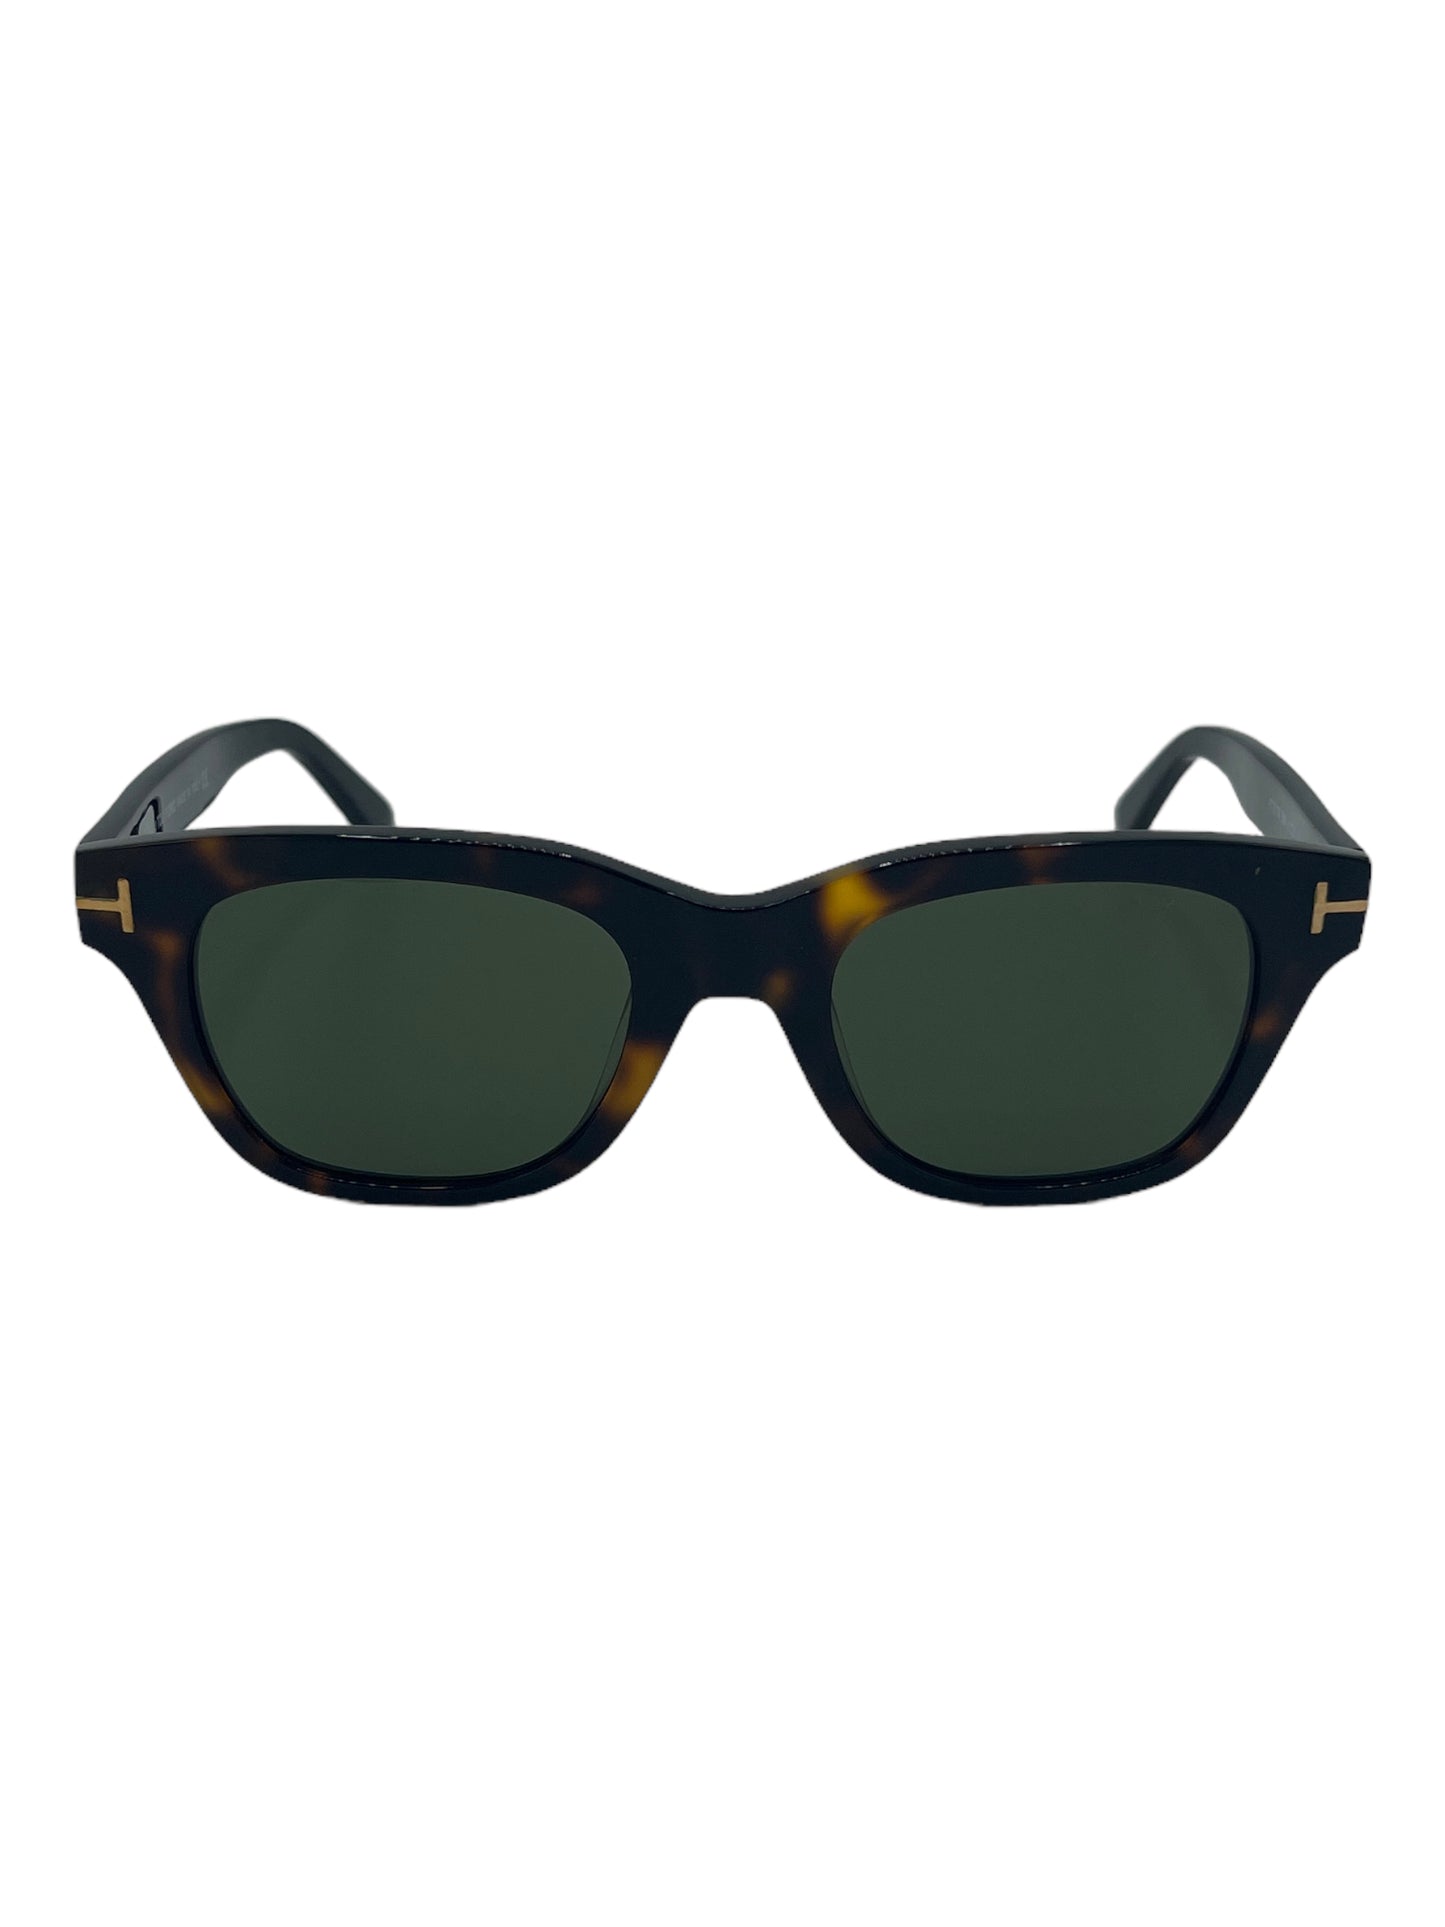 Tom Ford Tortoiseshell And Black Snowdon Sunglasses